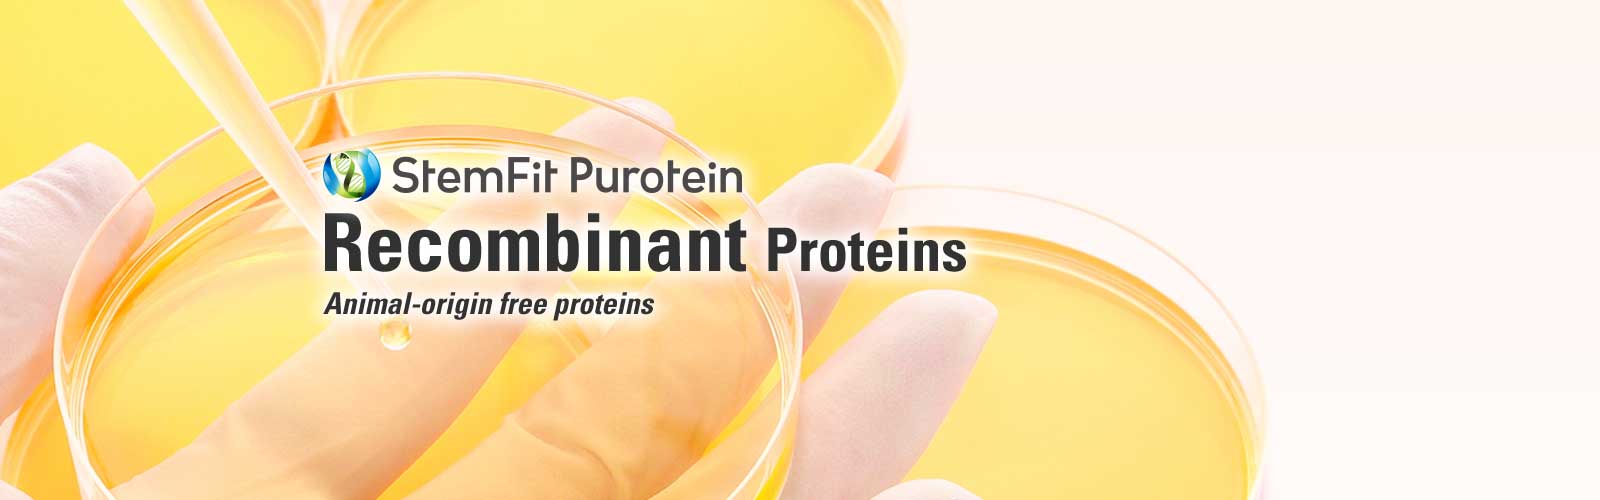 StemFit Puroteins Recombinant Proteins Animal-origin free proteins